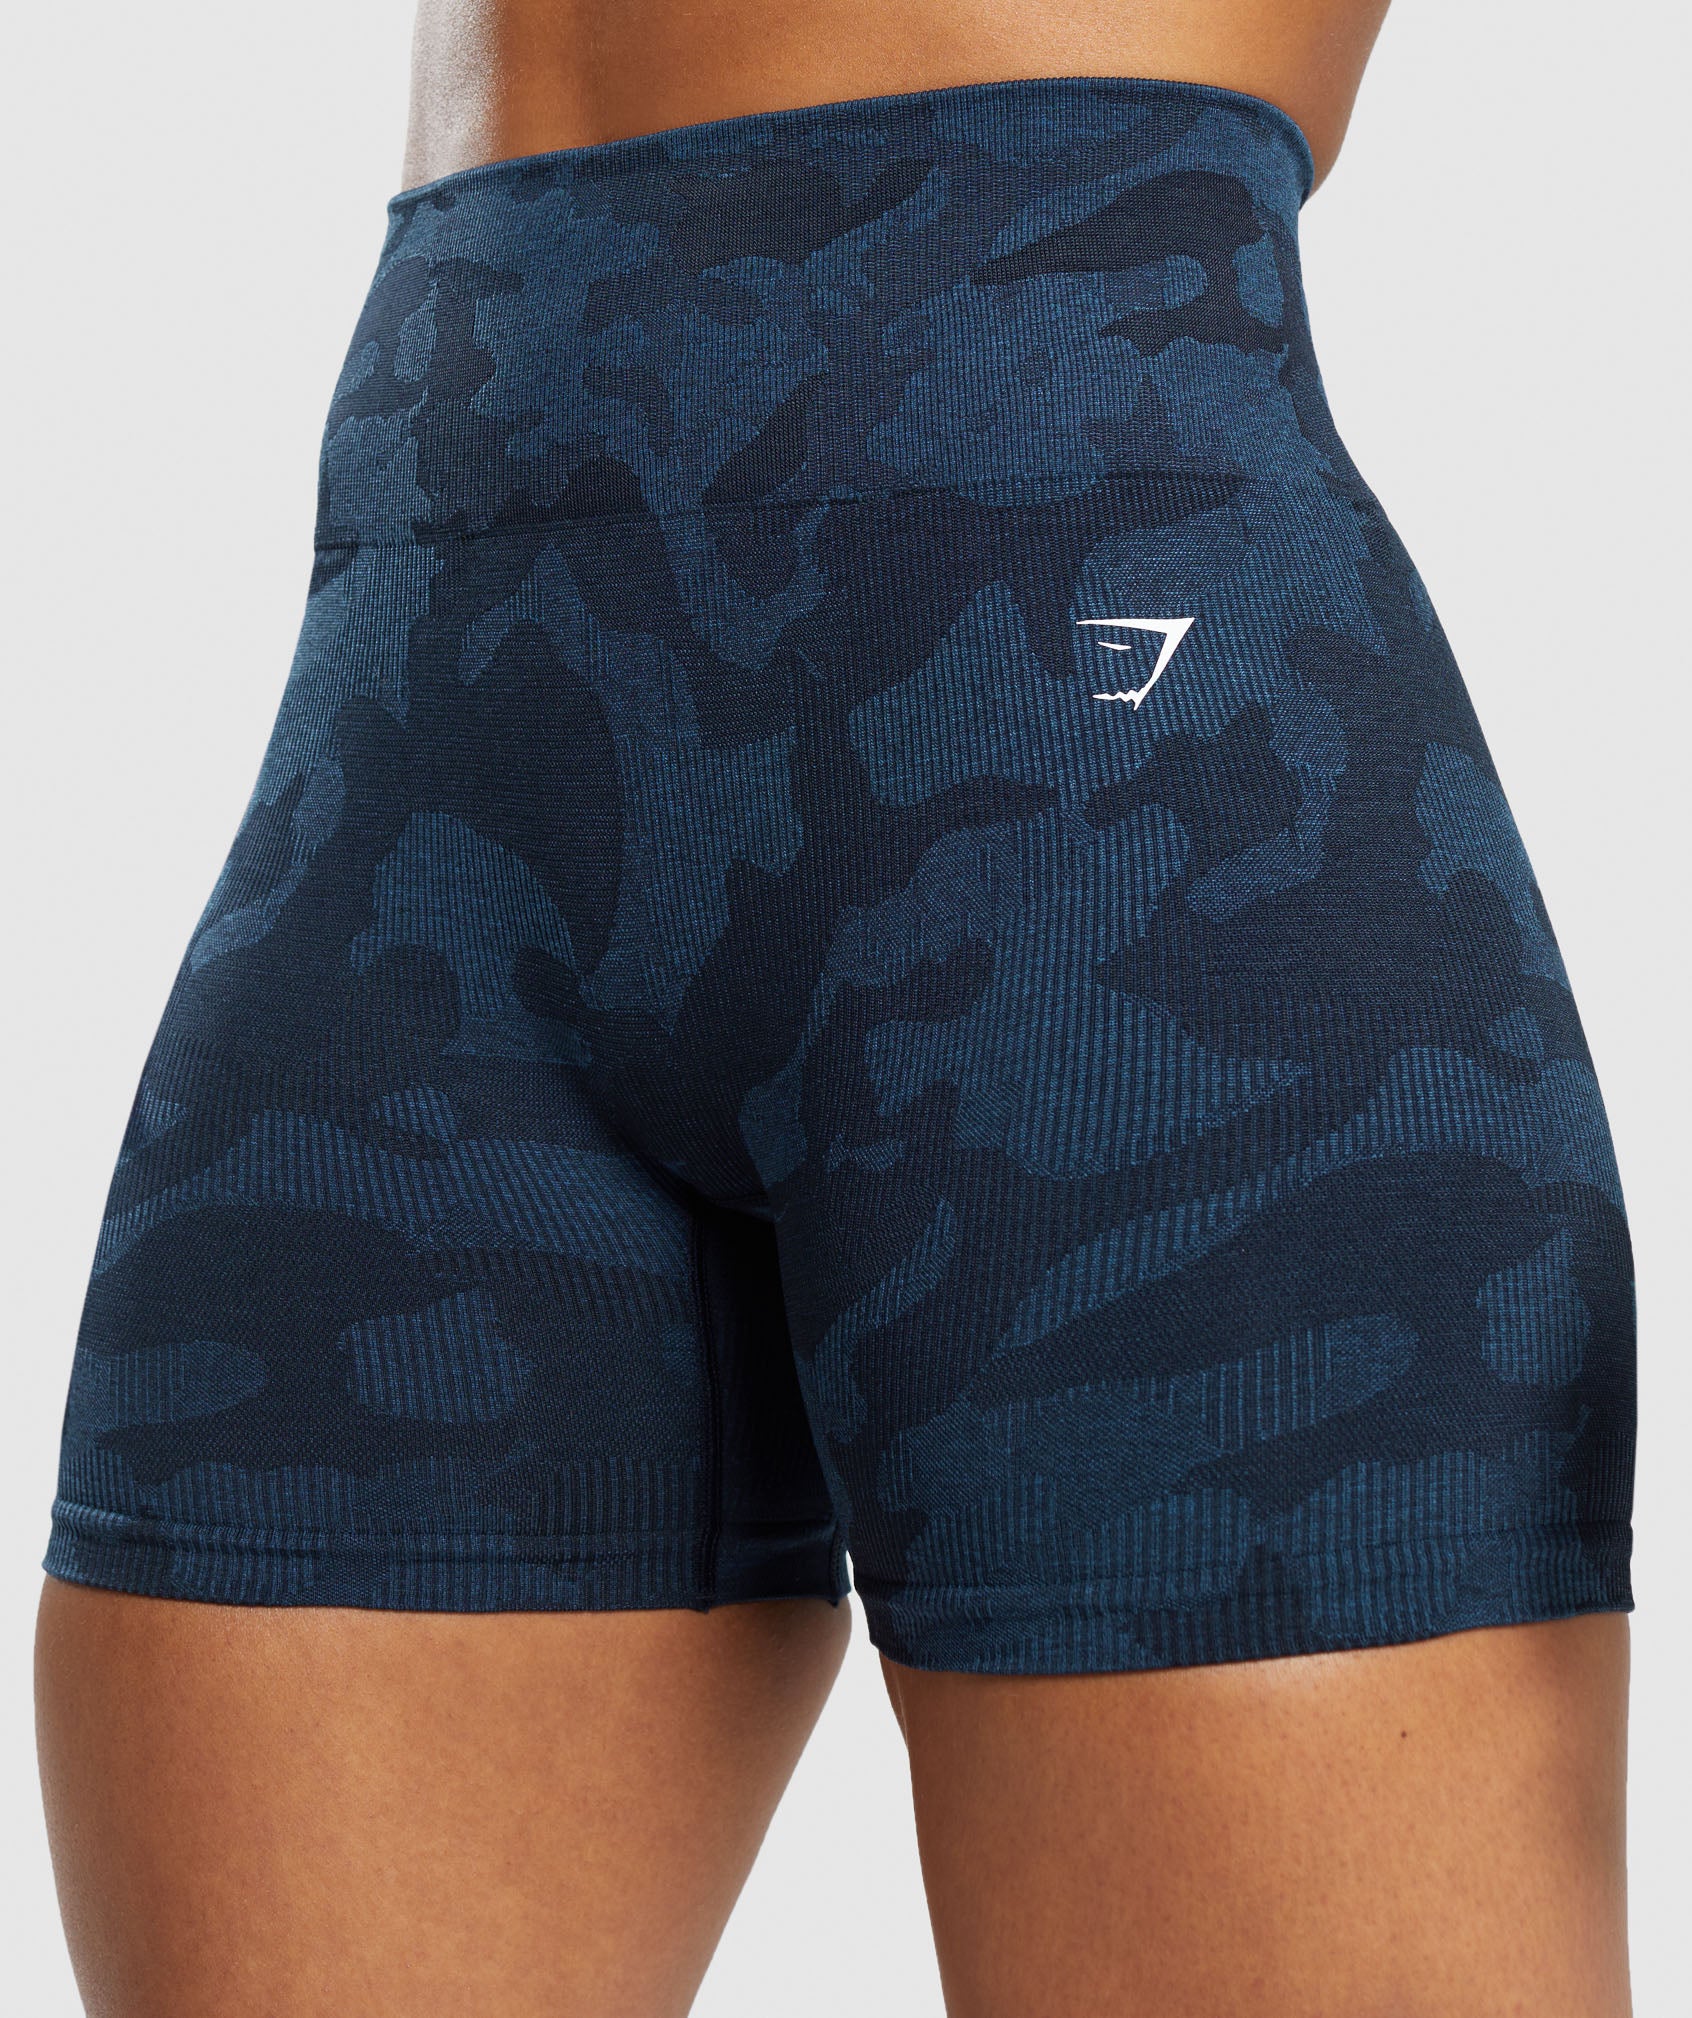 Gymshark Camouflage Athletic Shorts for Women